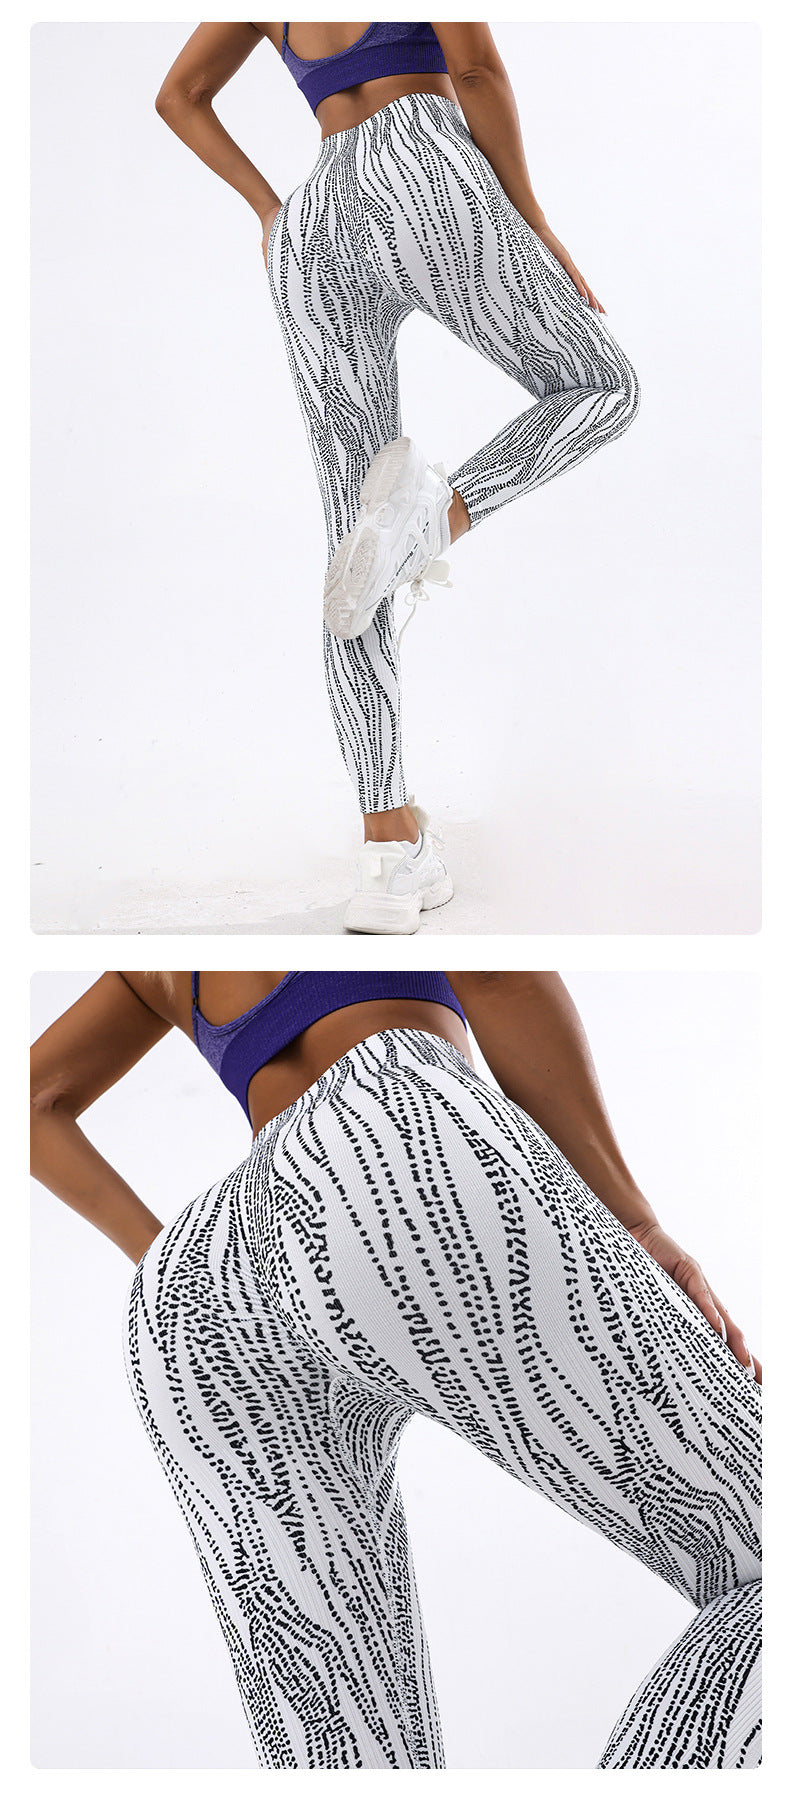 BamBam Printed Yoga Pants Women's Floral Tummy Control Butt Lift Yoga Pants Sports Fitness Leggings - BamBam